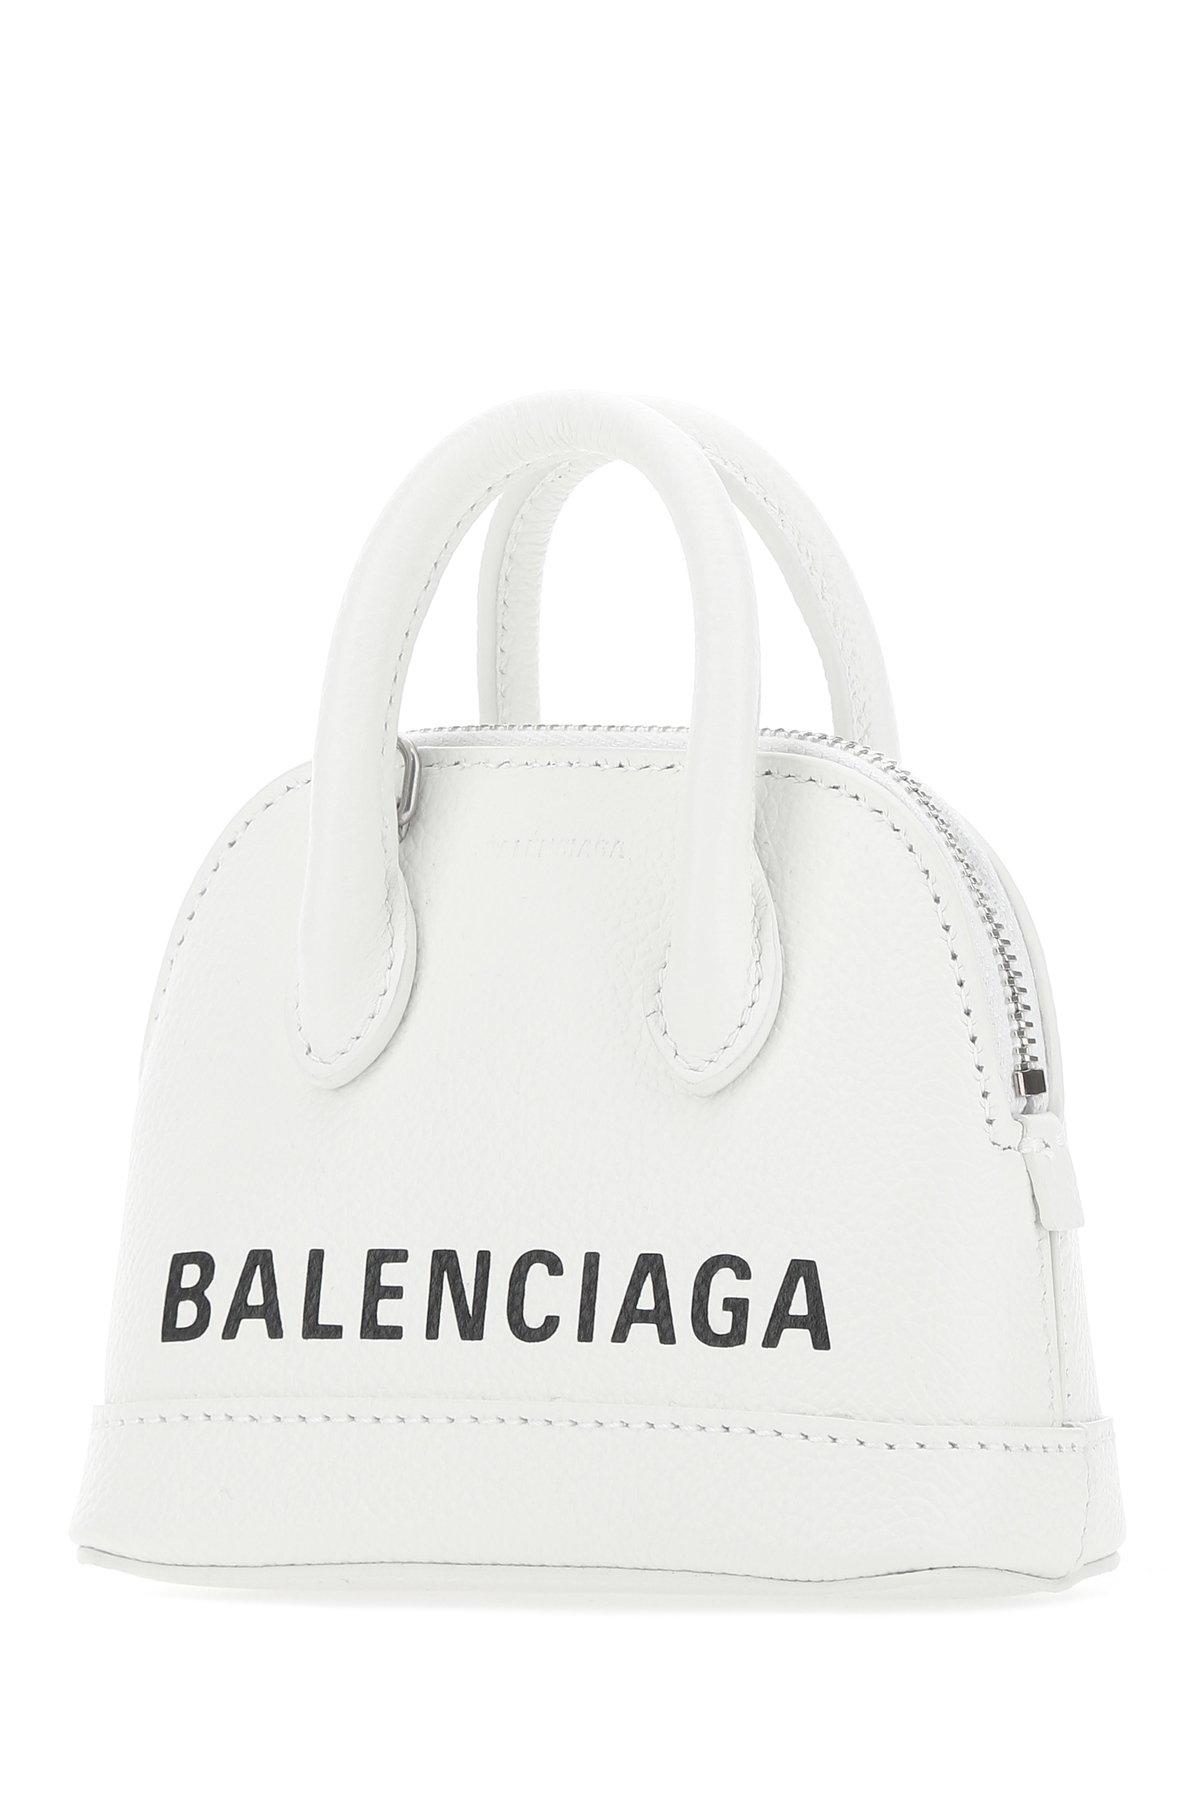 Balenciaga Ville Xxs Top Handle Bag in White | Lyst UK